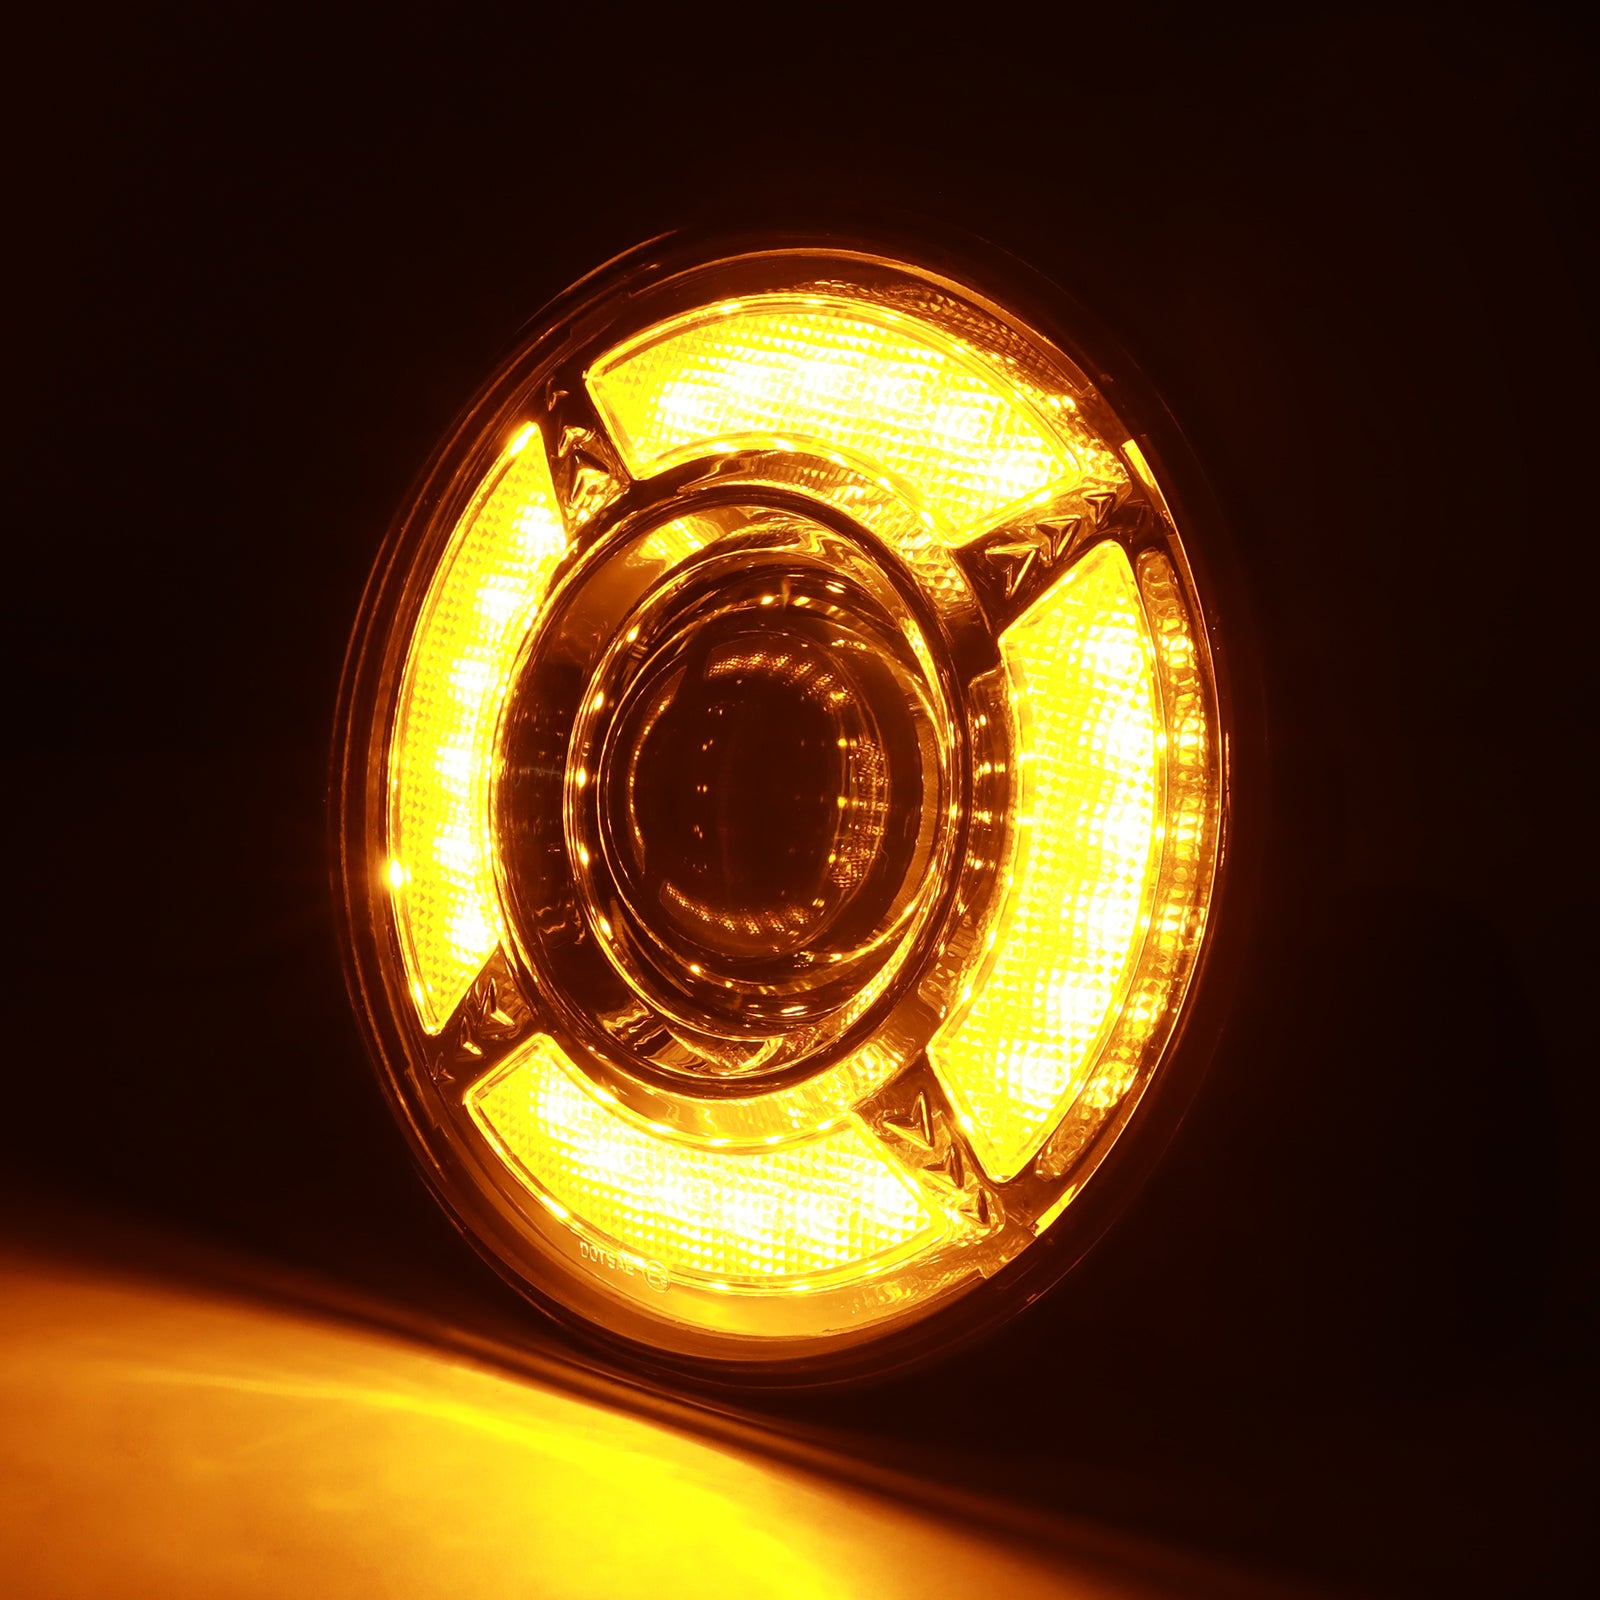 7 inch Round LED Headlights, Wrangler LED Headlight with Amber Turn Signal Light White DRL Compatible with Jeep Wrangler JK TJ LJ CJ JKU Unlimited Rubicon Sahara